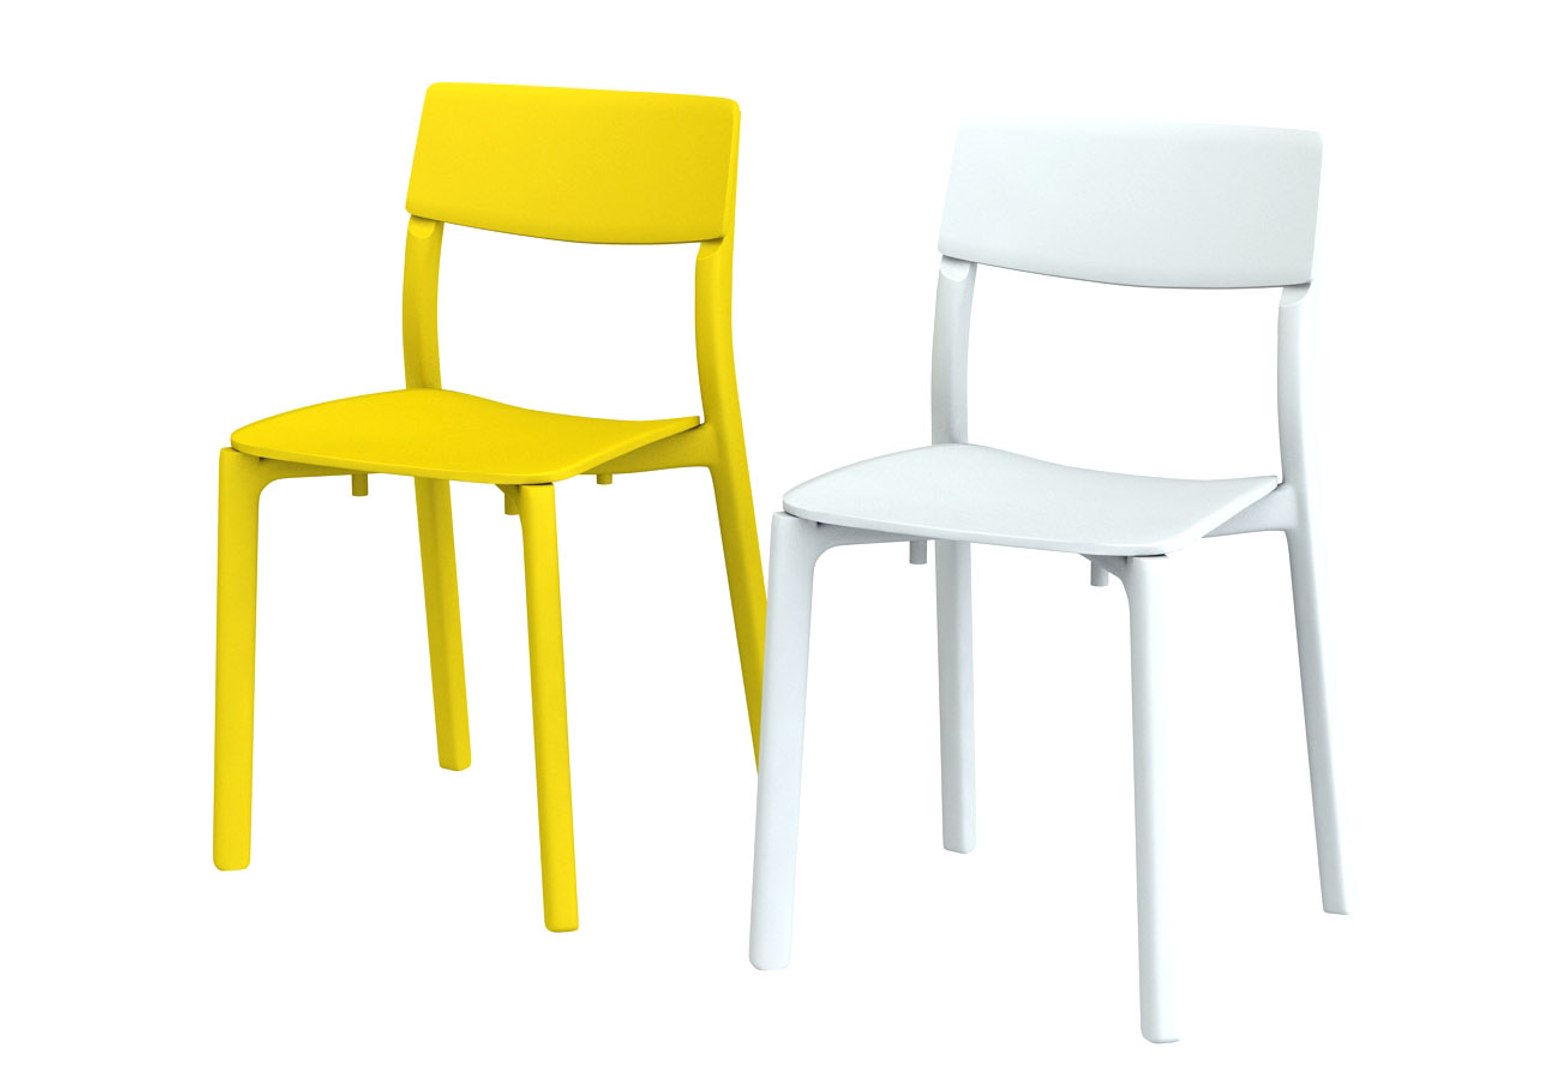 JANINGE Chair, white - IKEA